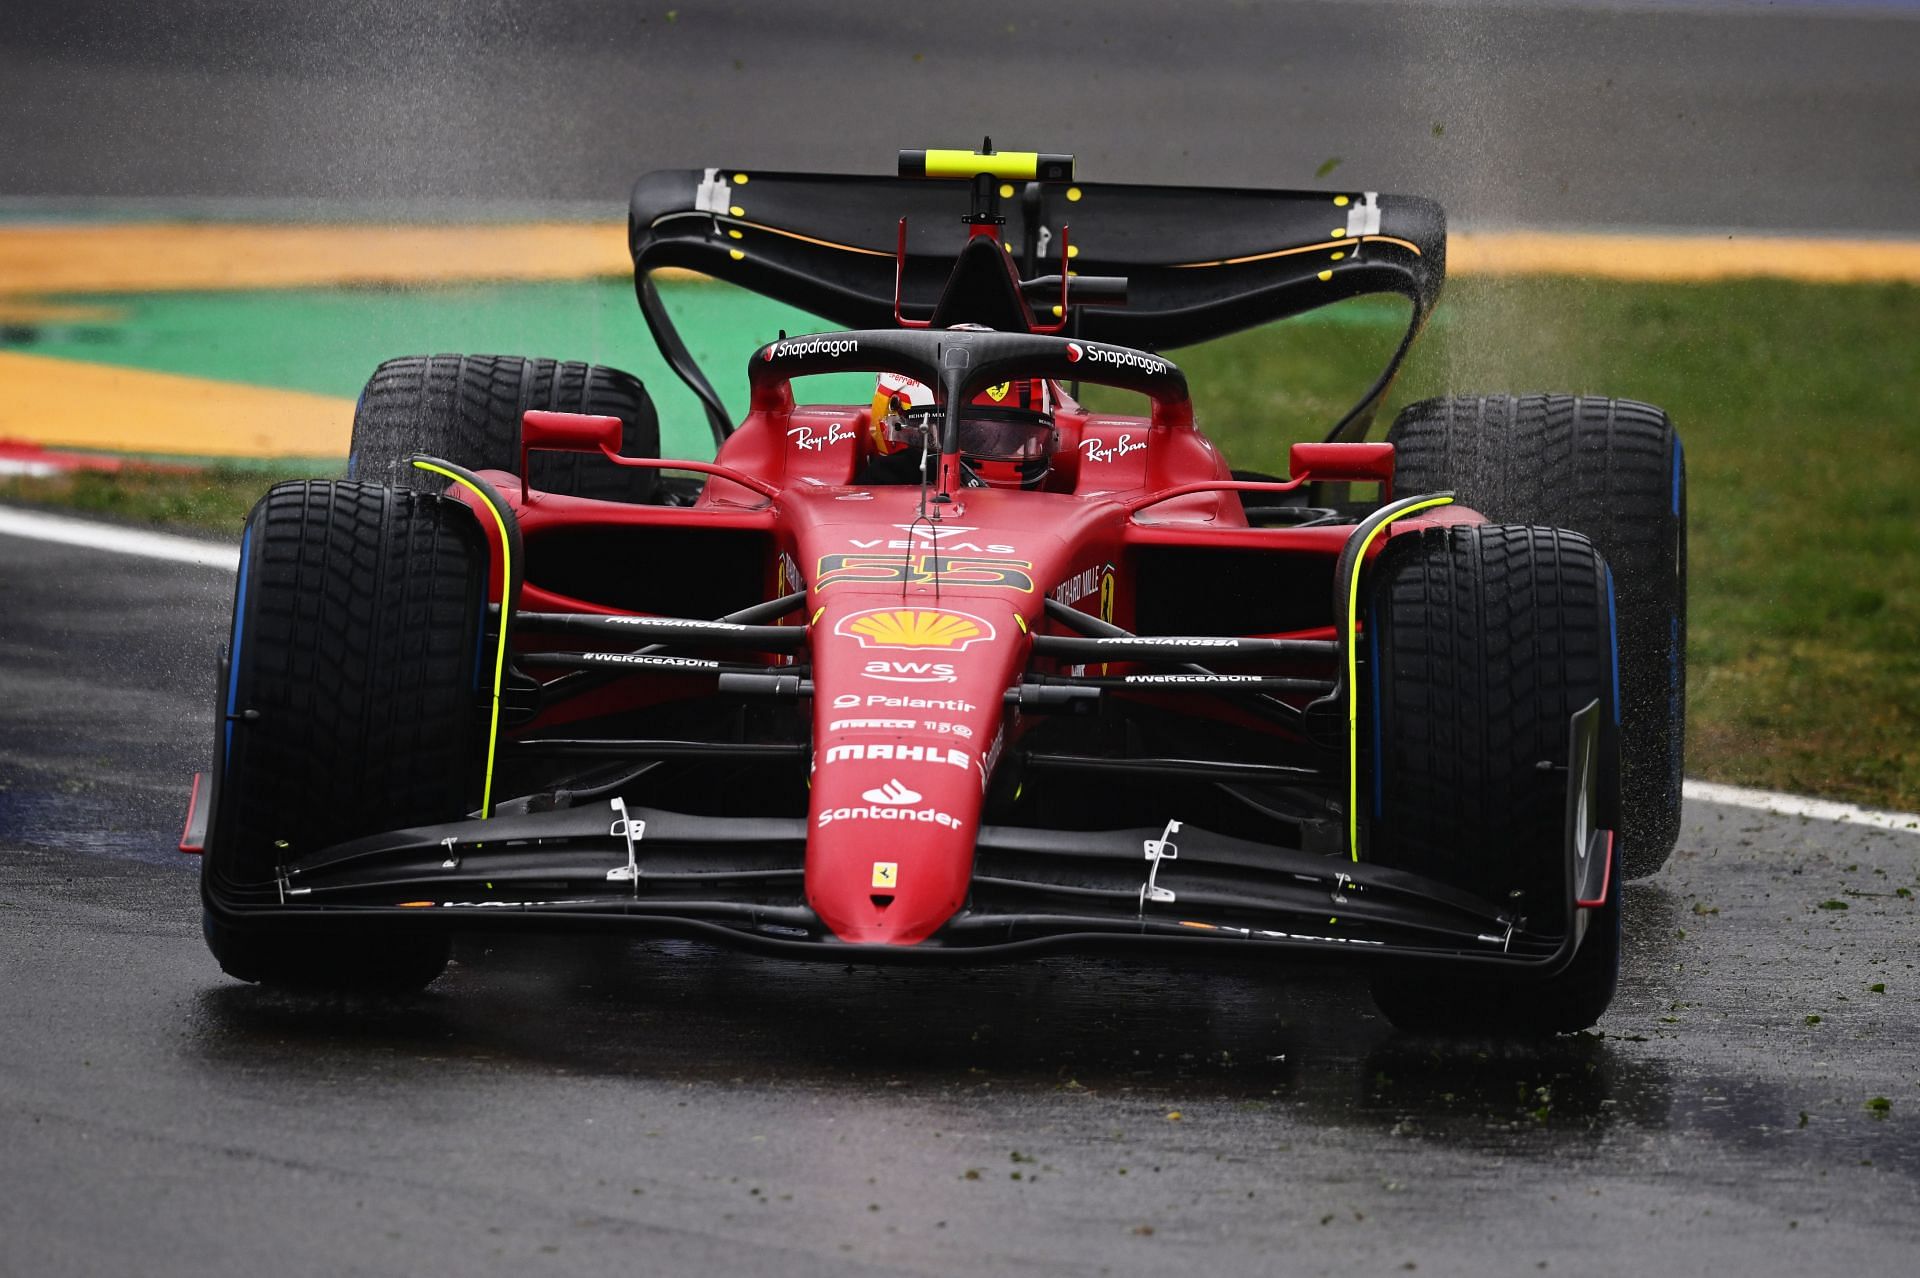 Ferrari was the most impressive machinery in FP1